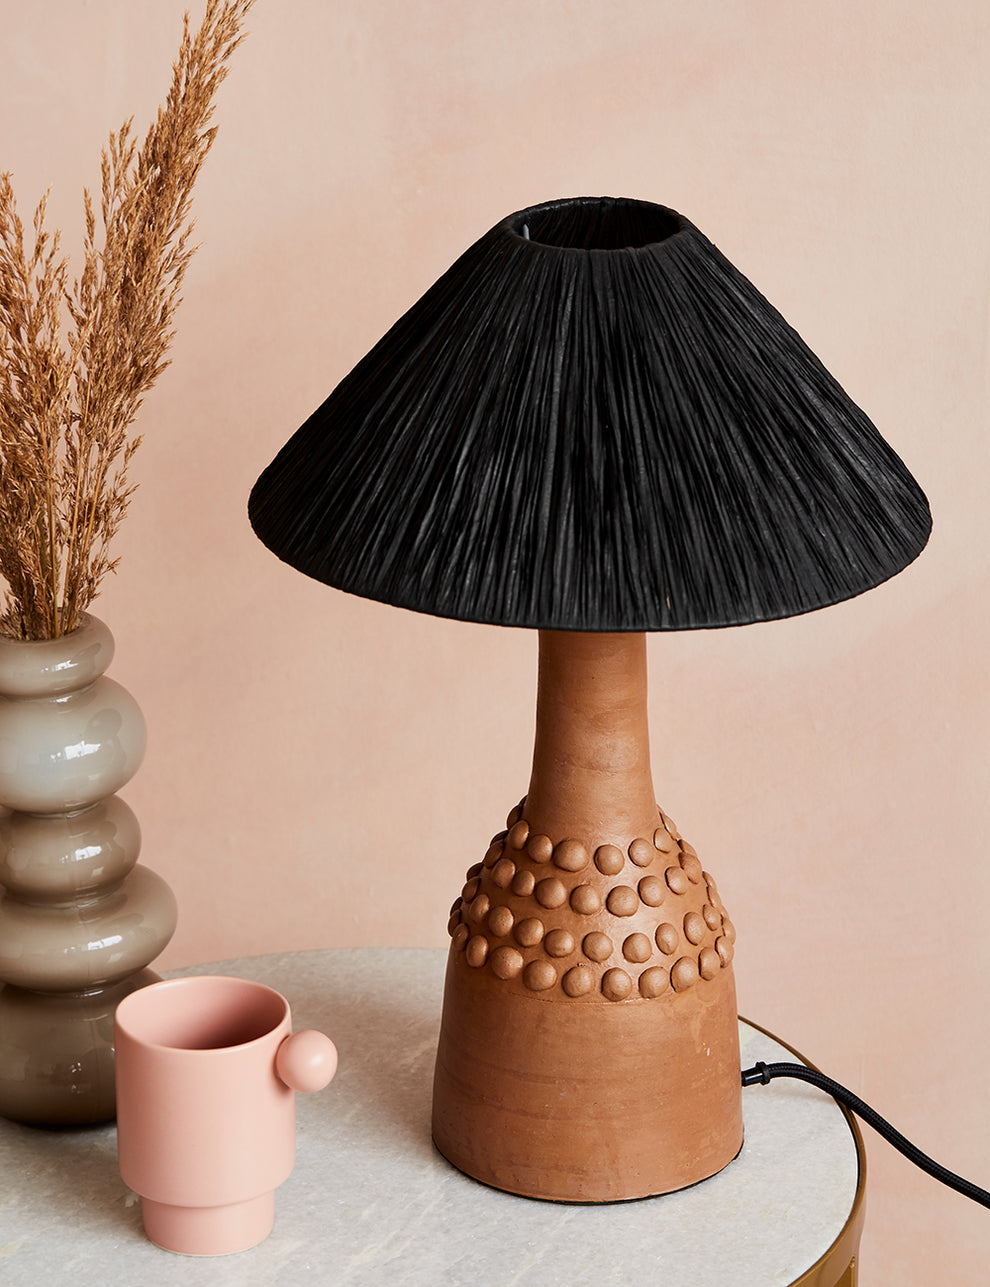 Tan Bobbled Terracotta Table Lamp with Black Raffia Shade
